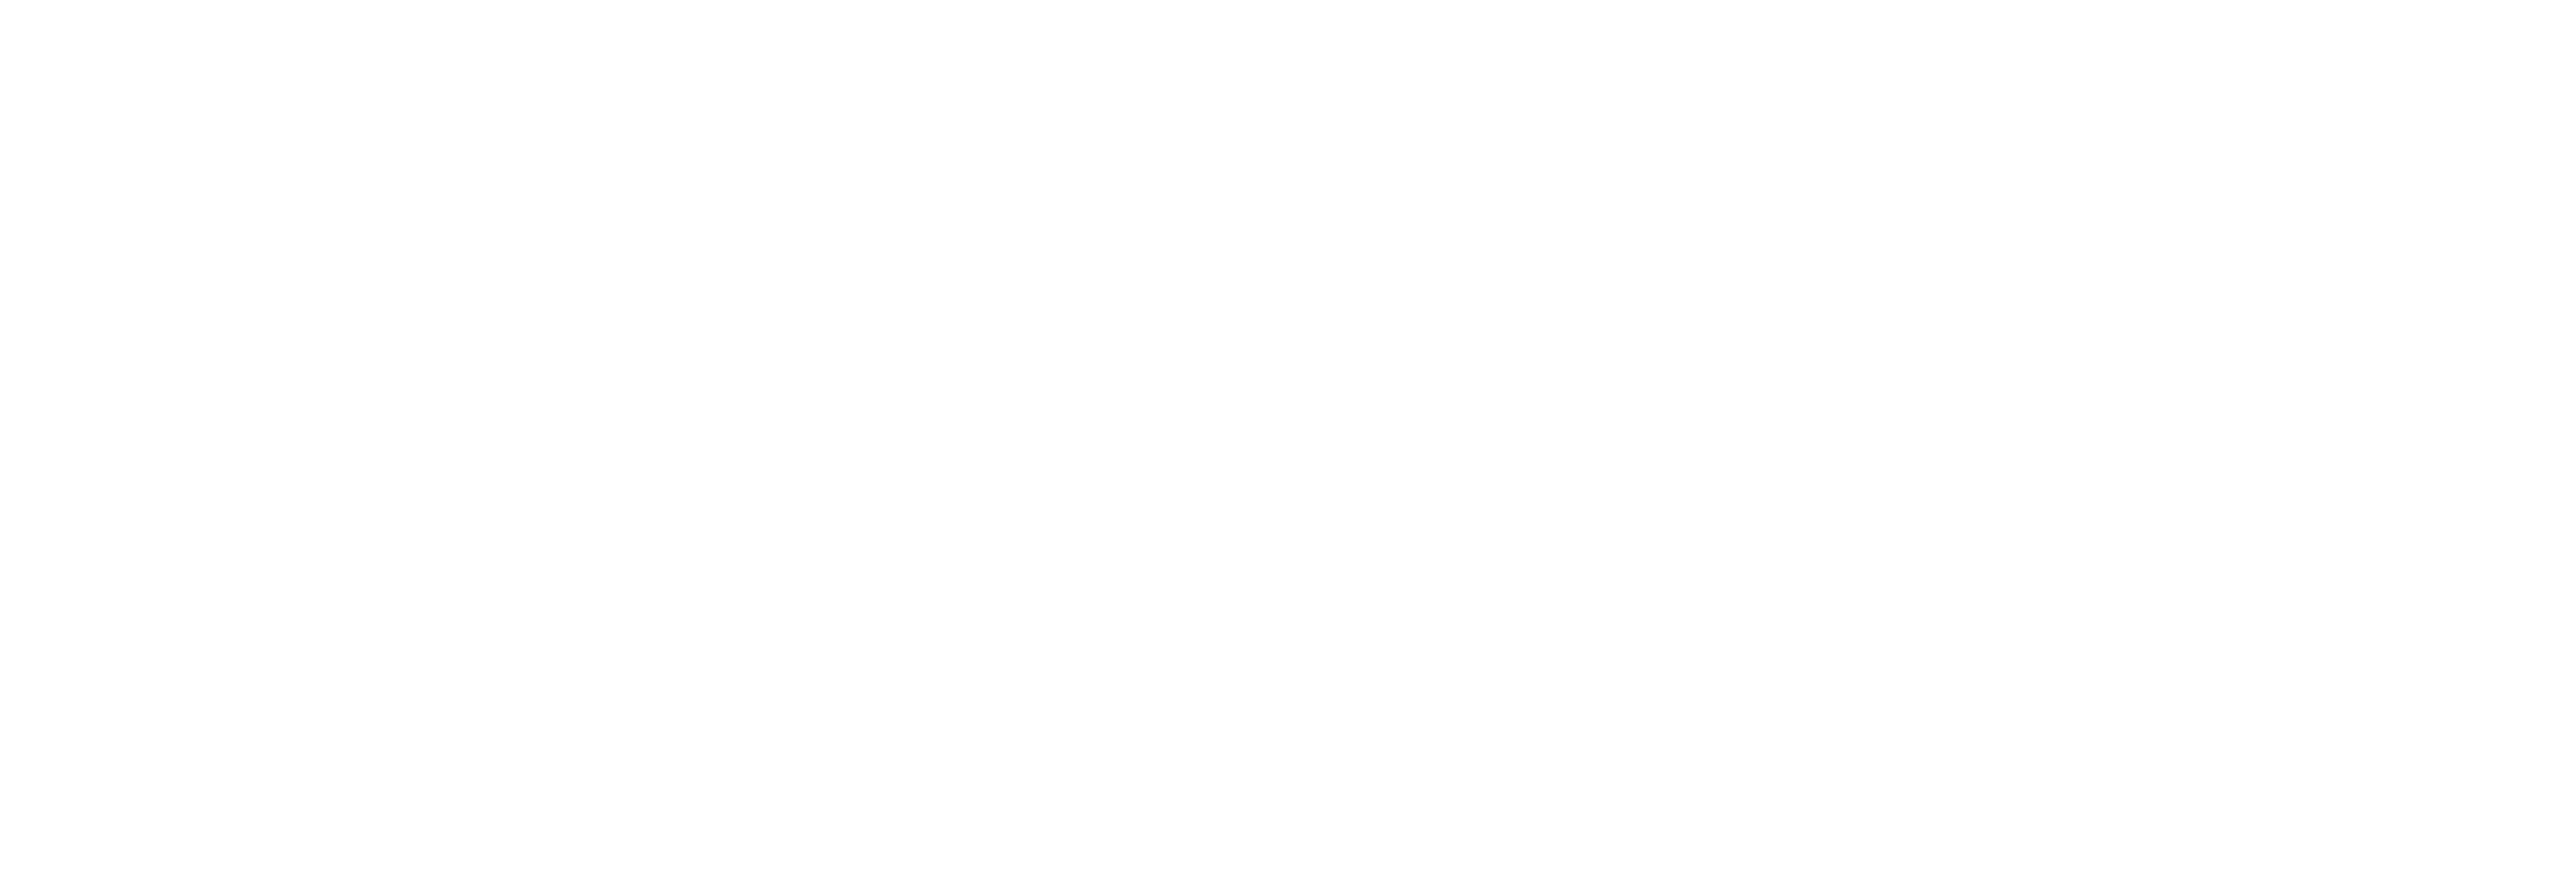 AniCura Lauro Hospital Veterinari logo